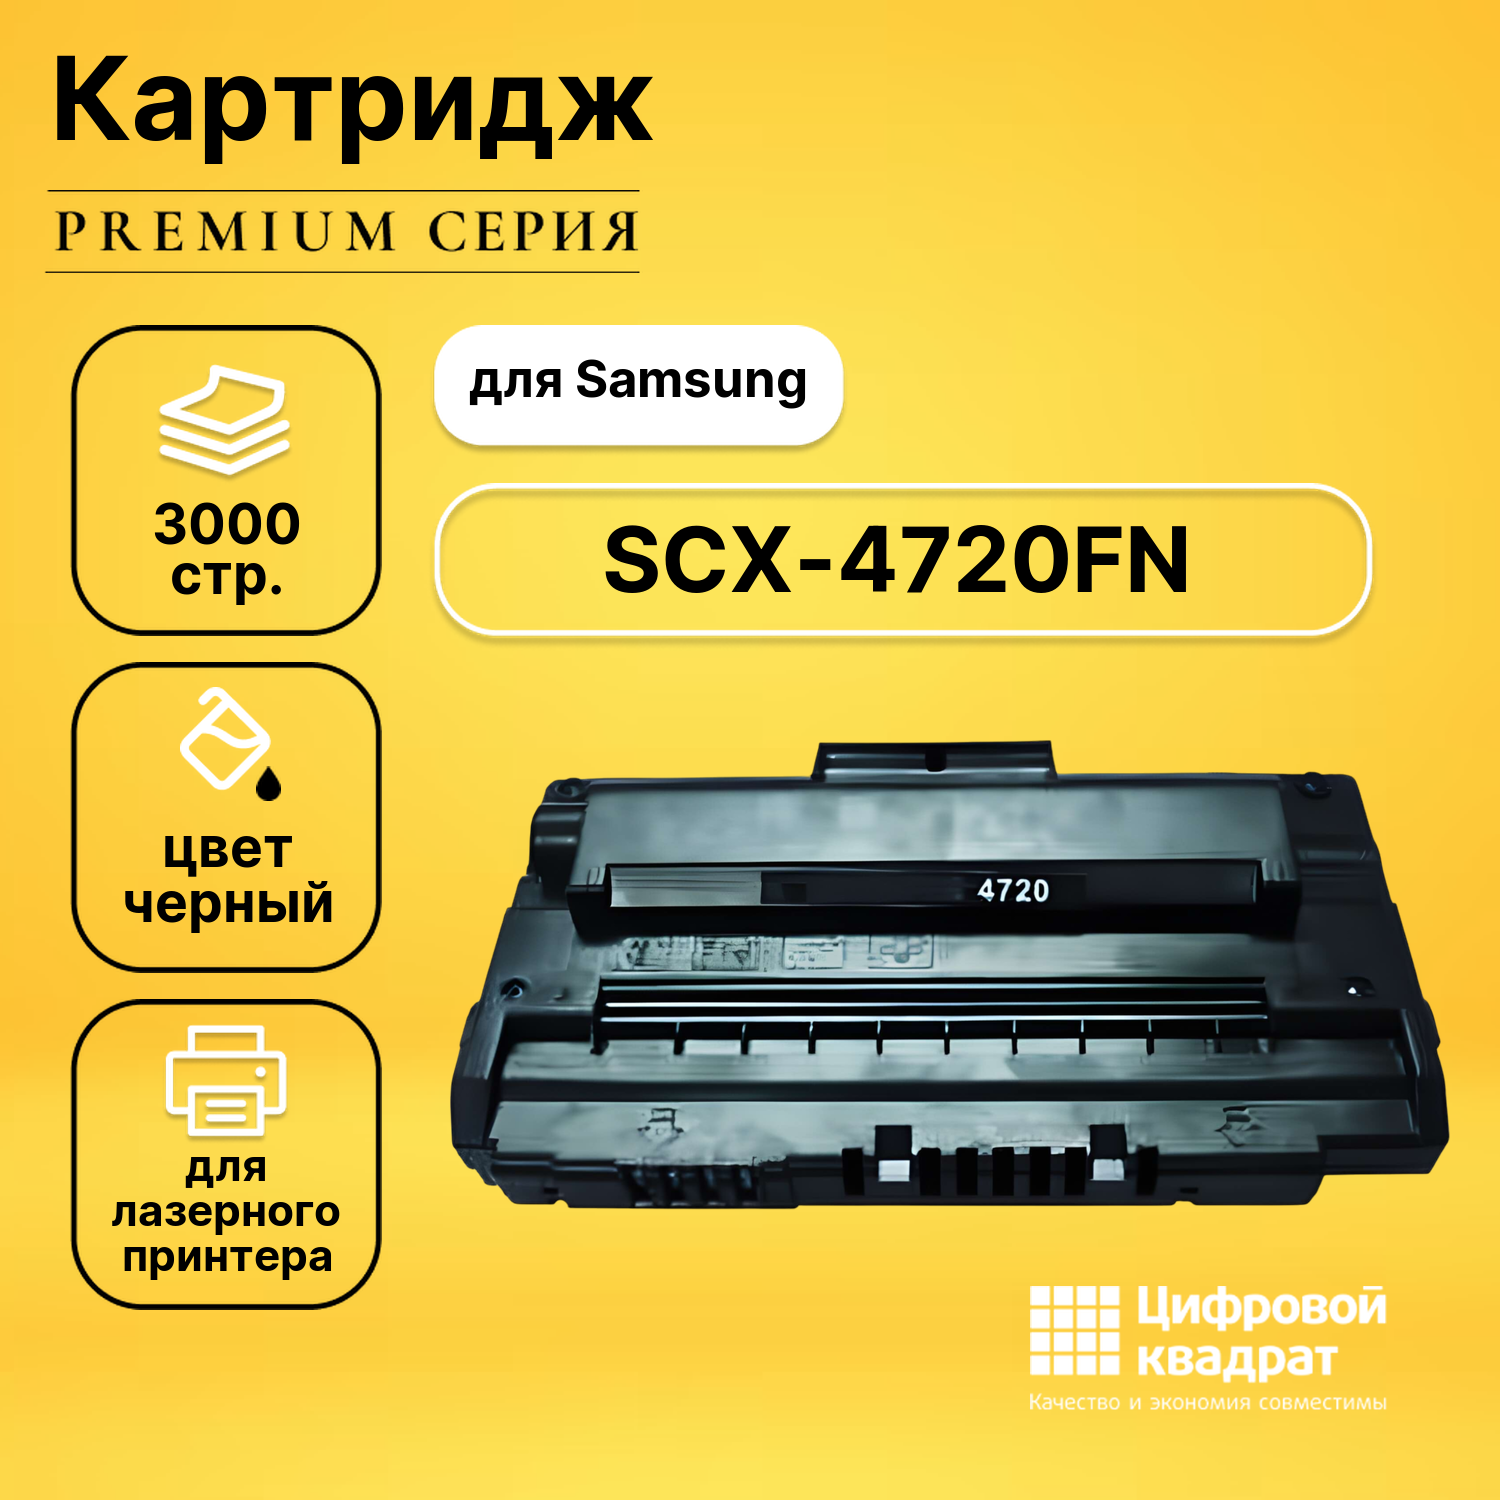 Картридж DS для Samsung SCX-4720FN совместимый